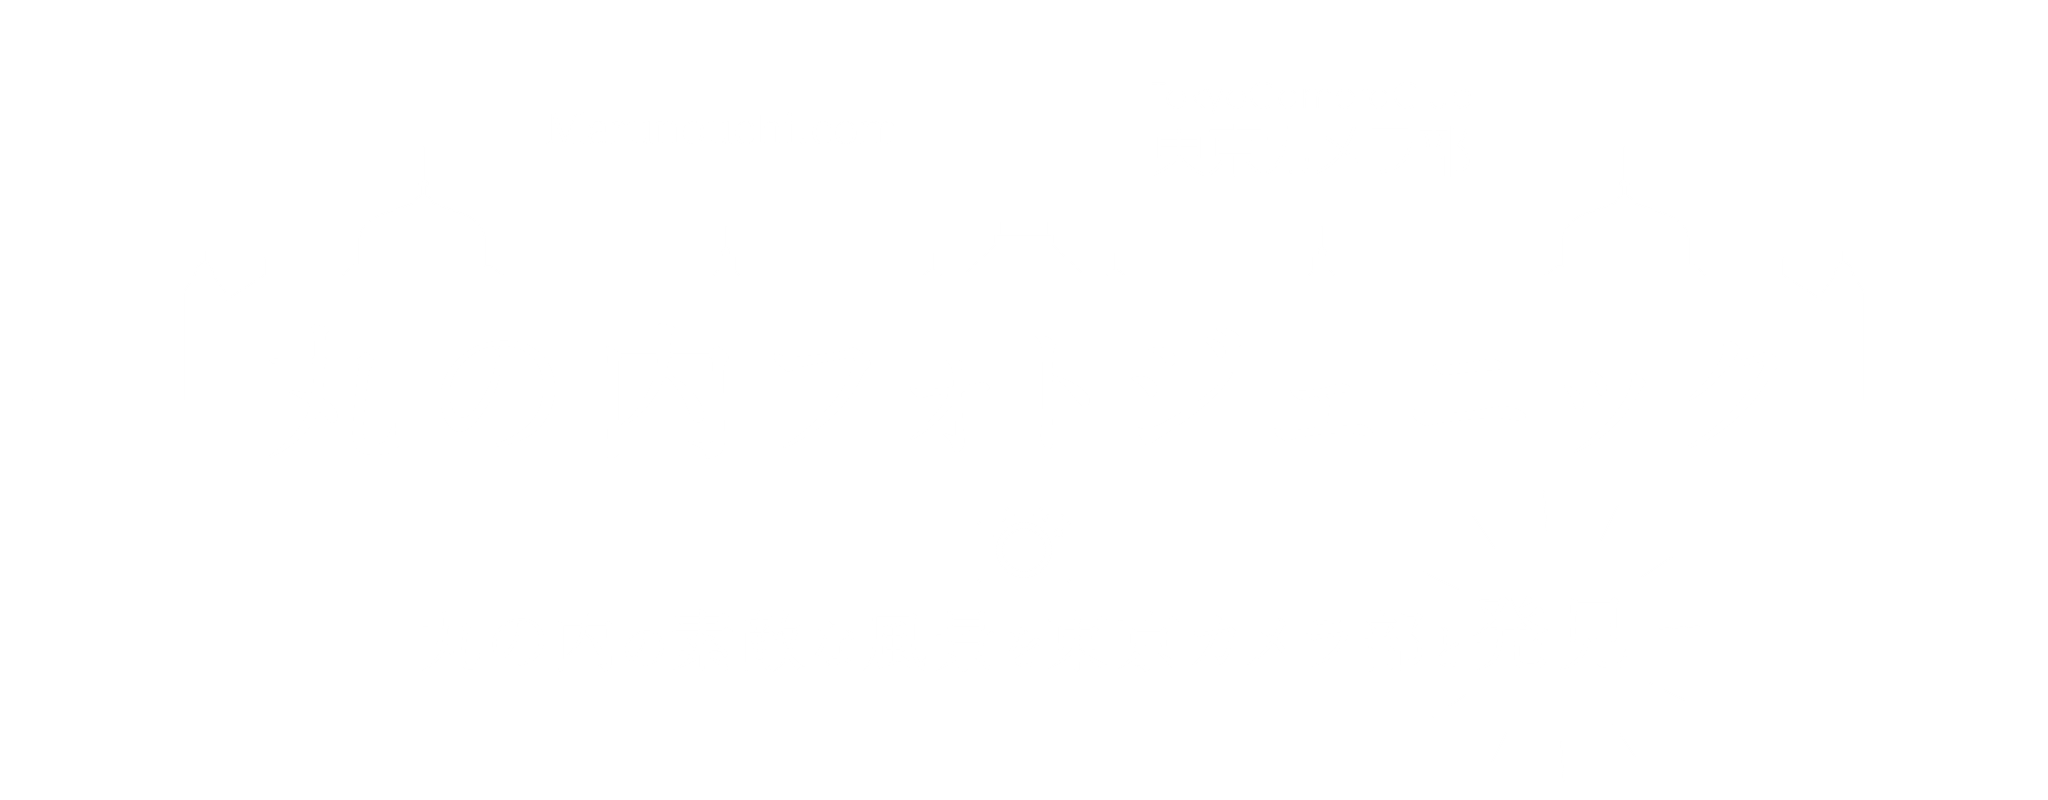 Marunouchi Photogenic Discover the wonderful scenery of Marunouchi with the Tokyo Camera Club